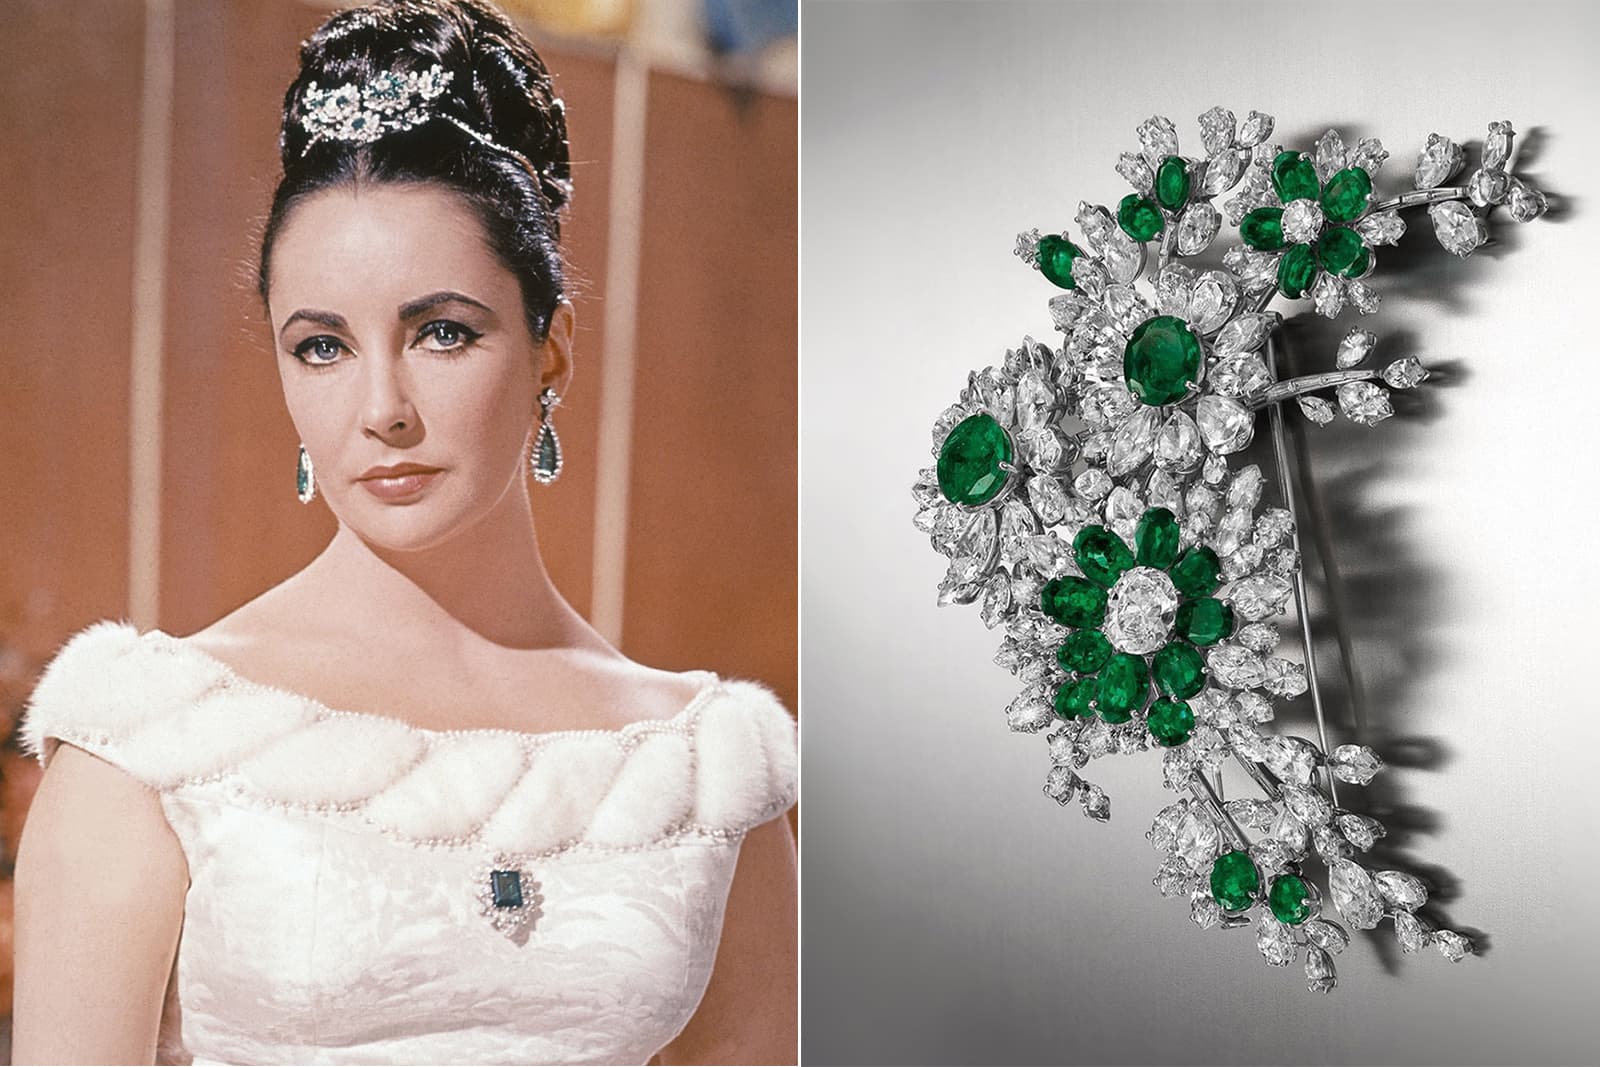 Elizabeth Taylor wearing her Bvlgari en tremblent brooch in emeralds and diamonds as a hair ornament, 1963